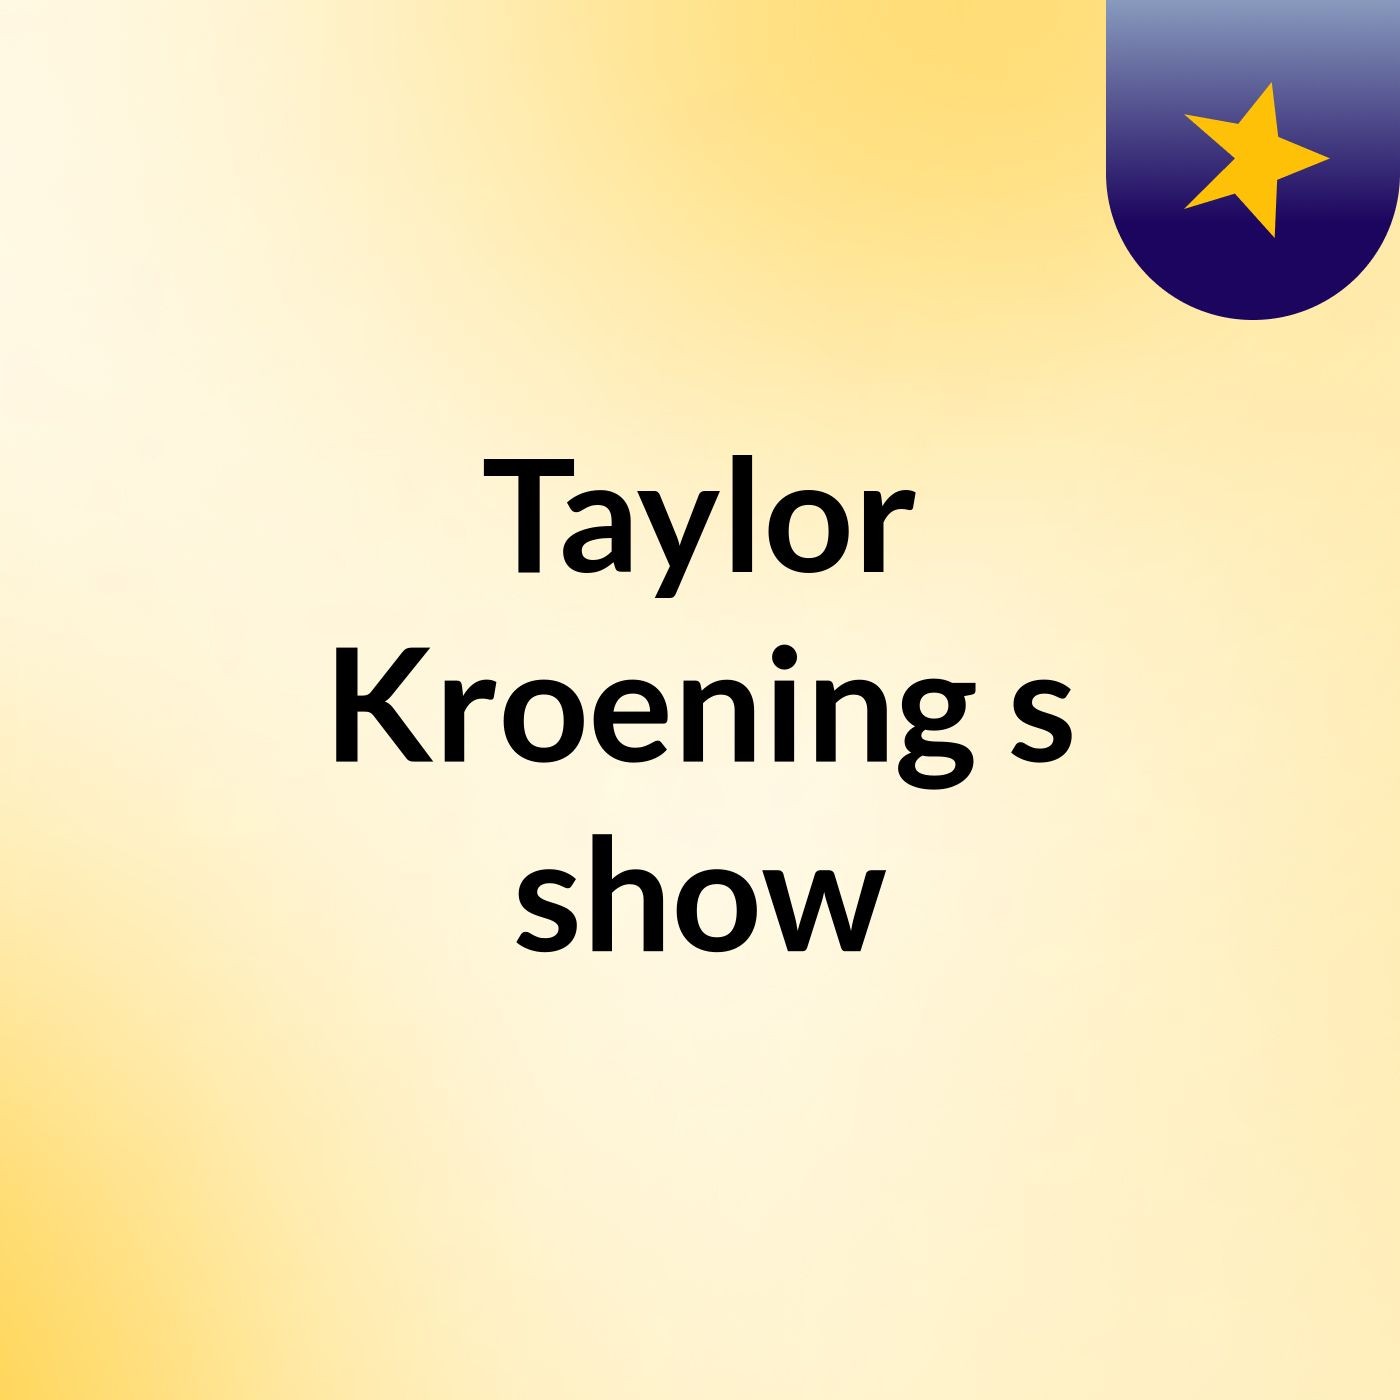 Taylor Kroening's show